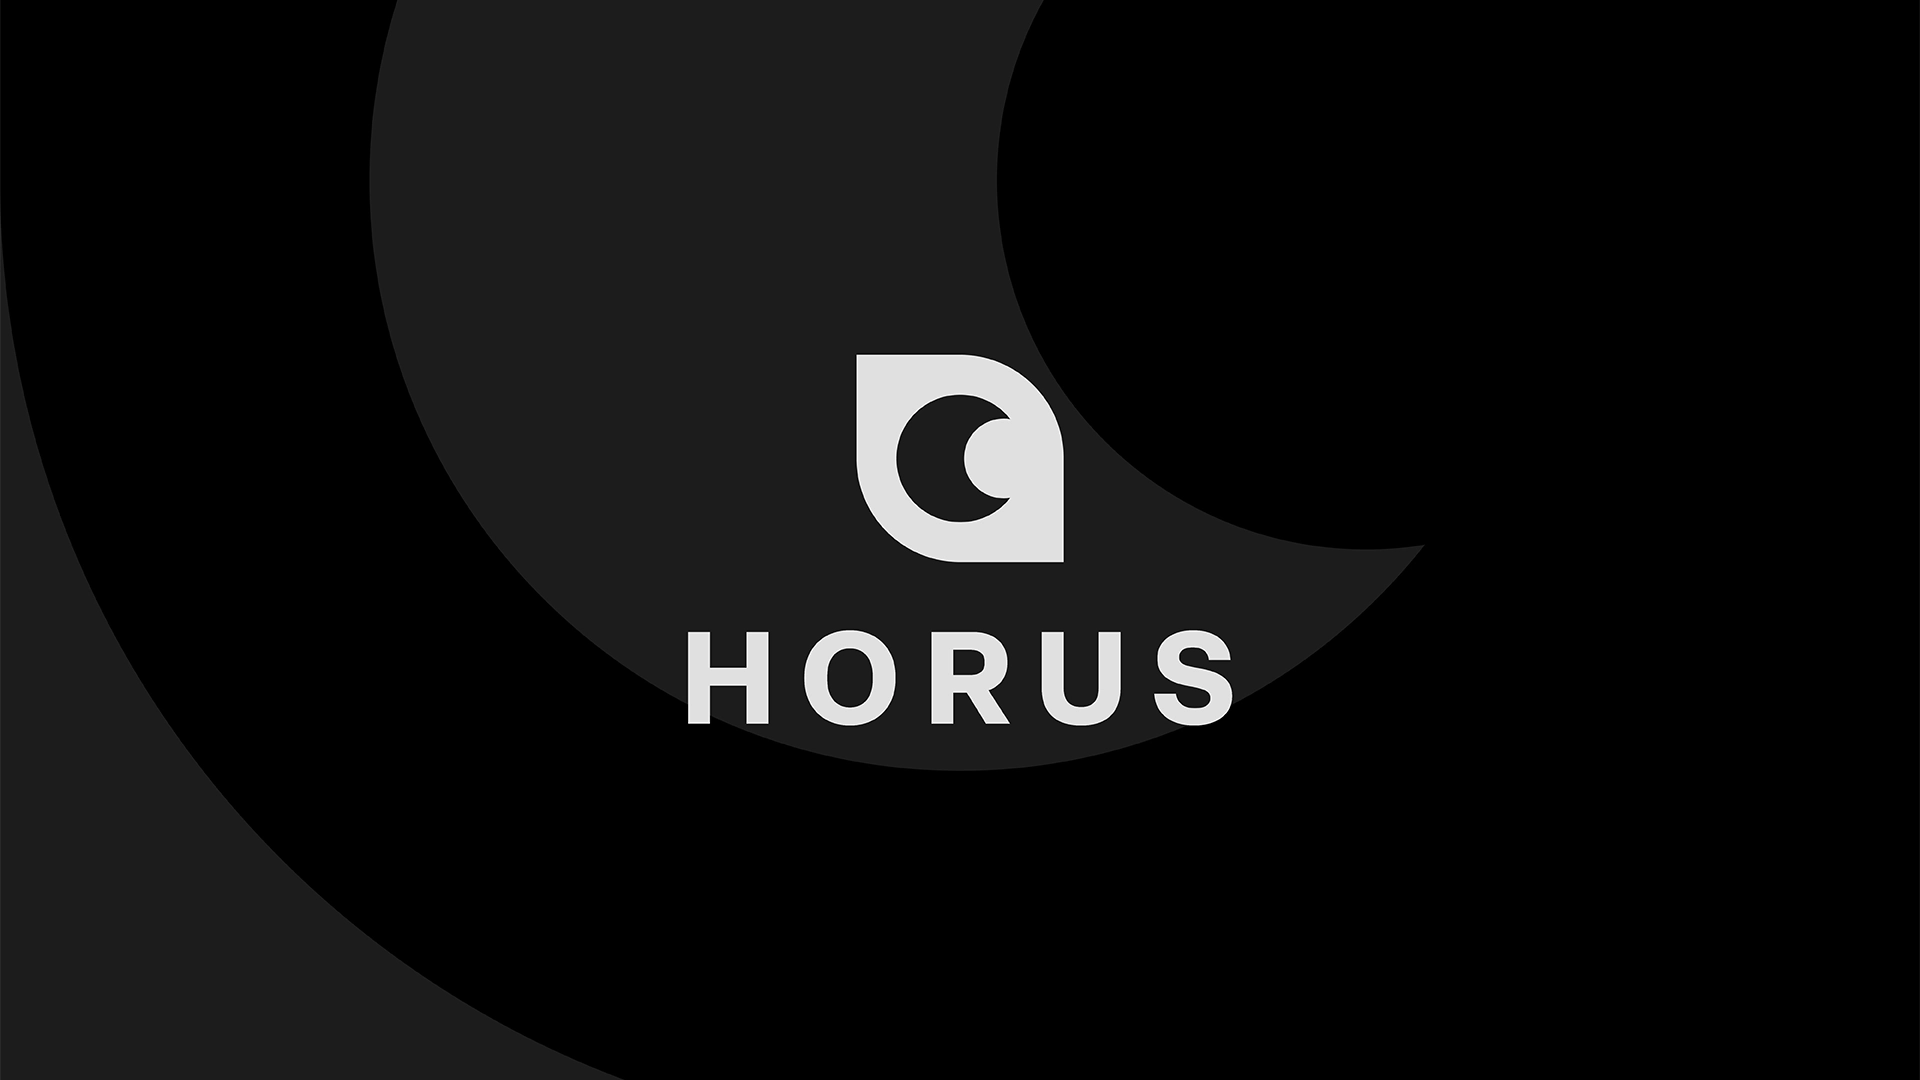 Horus' visual identity project case study